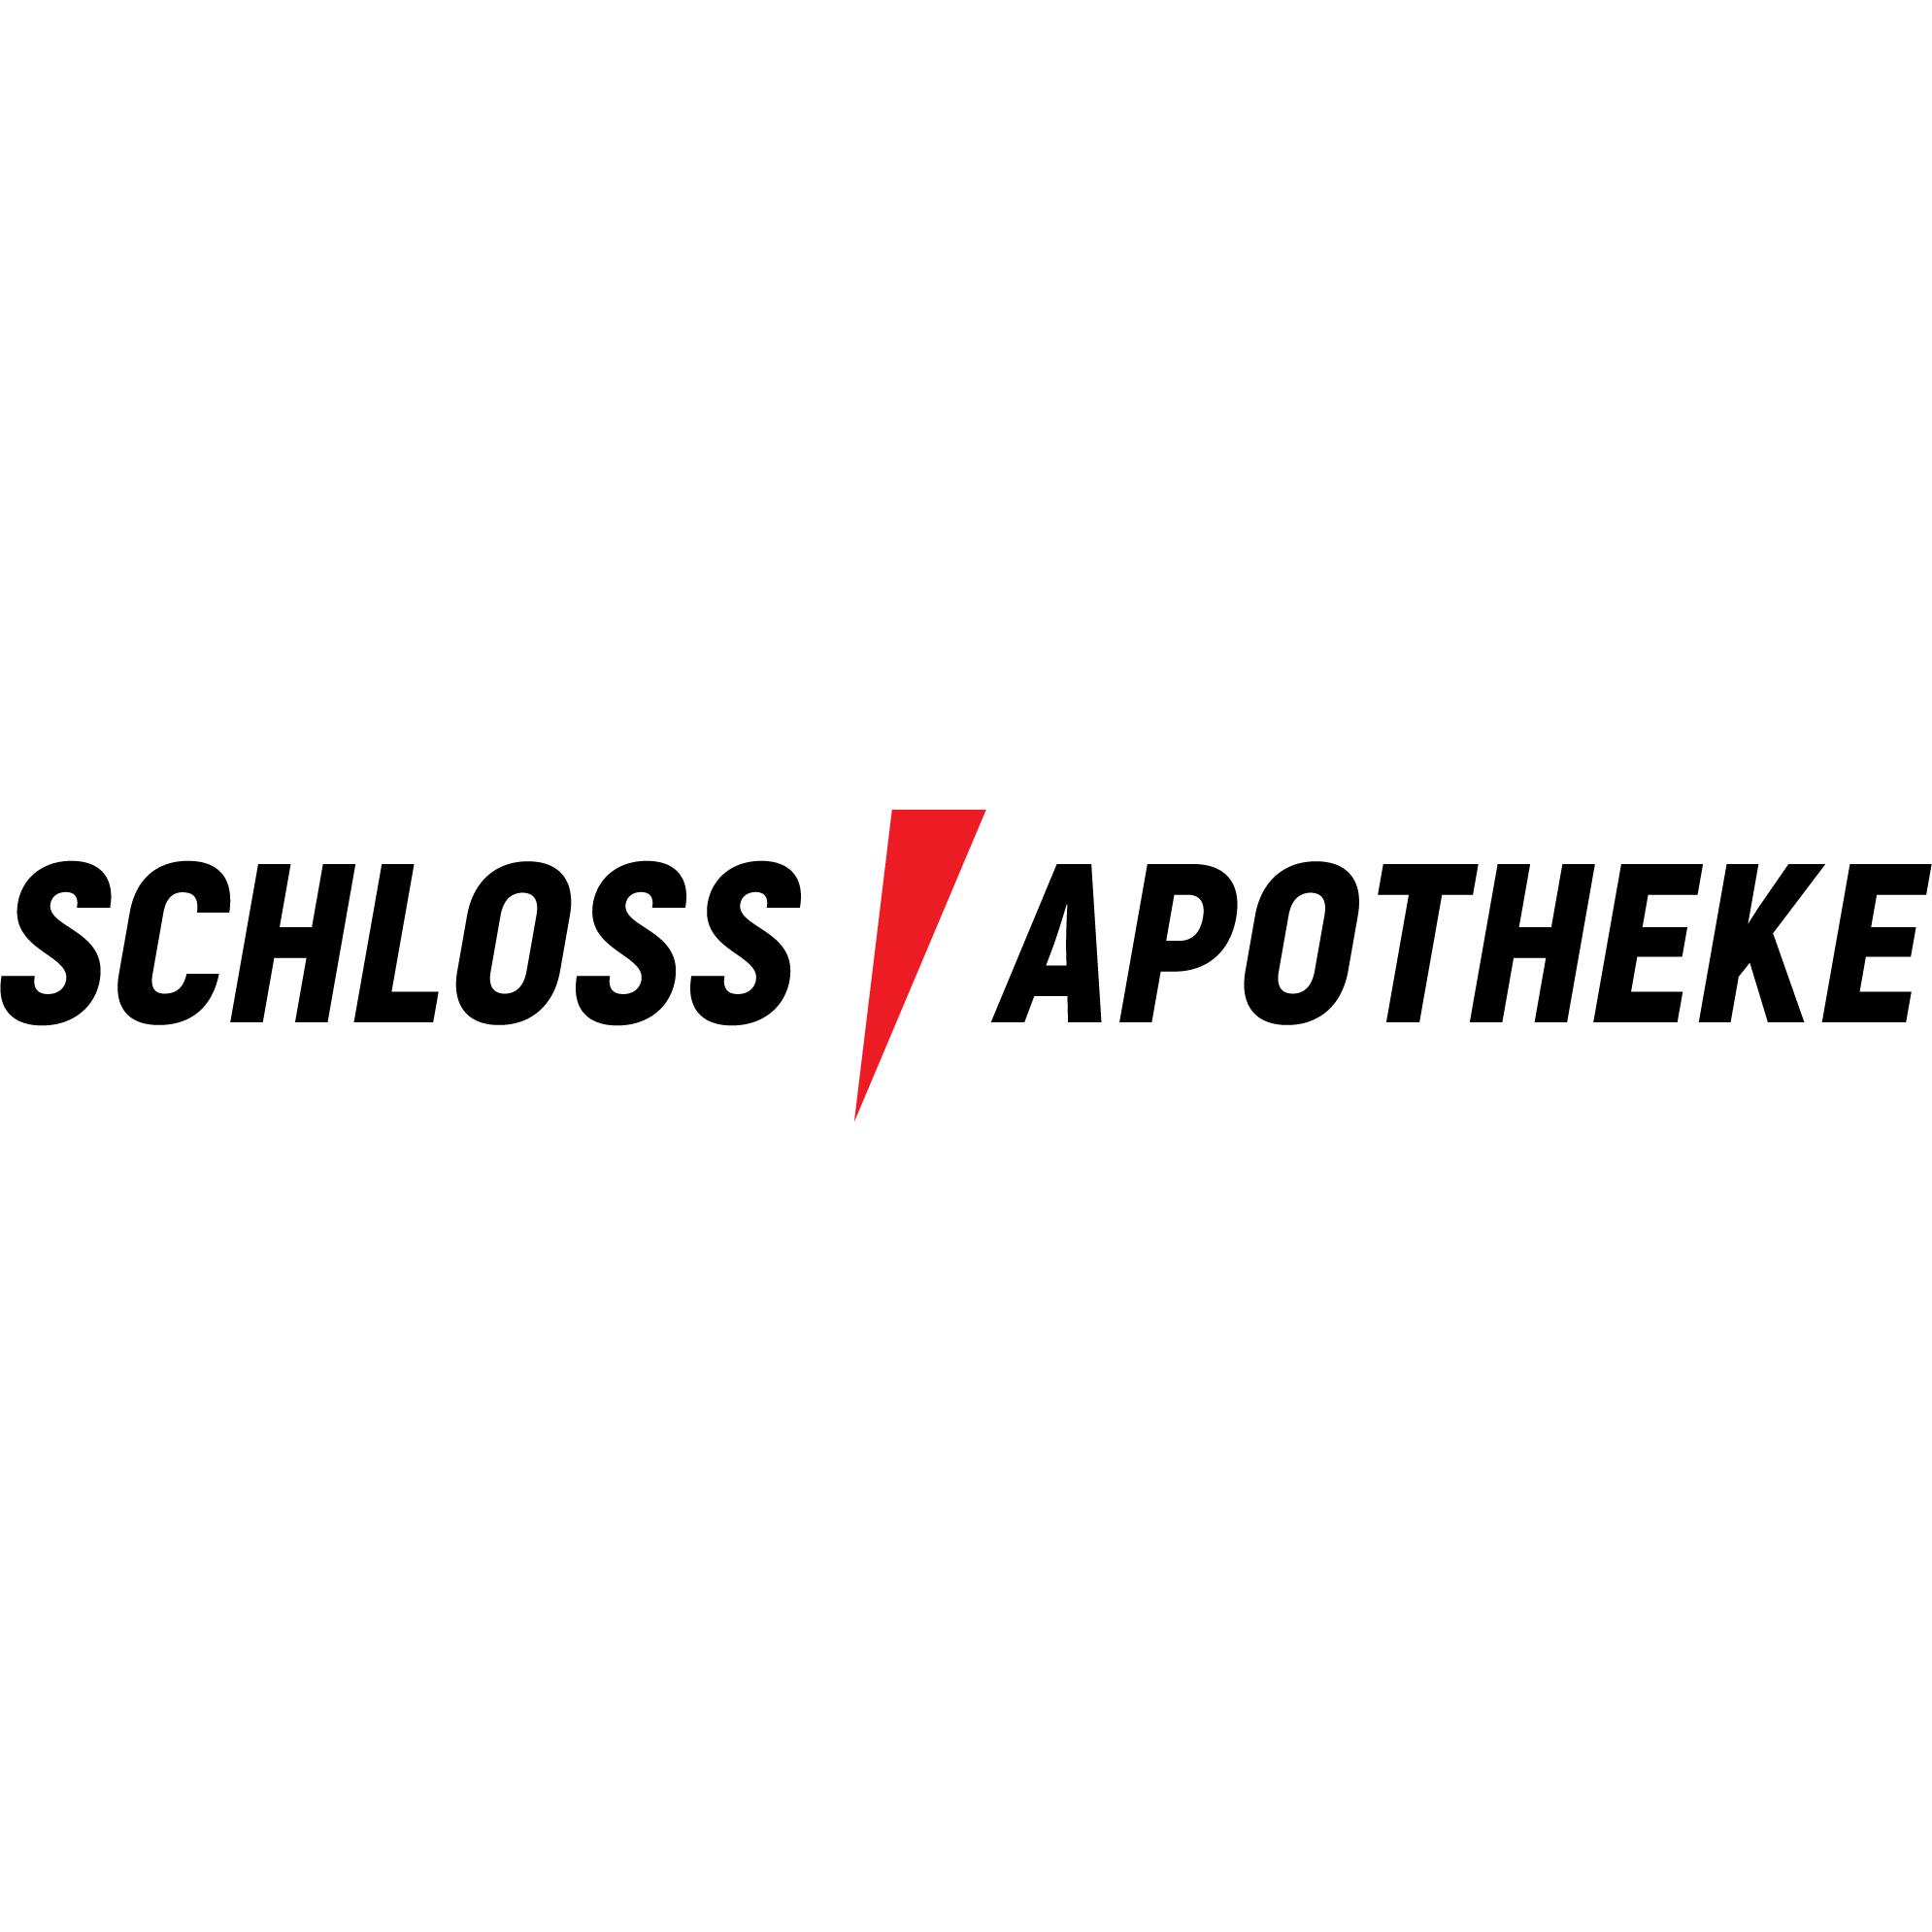 Schloss-Apotheke in Offenbach am Main - Logo